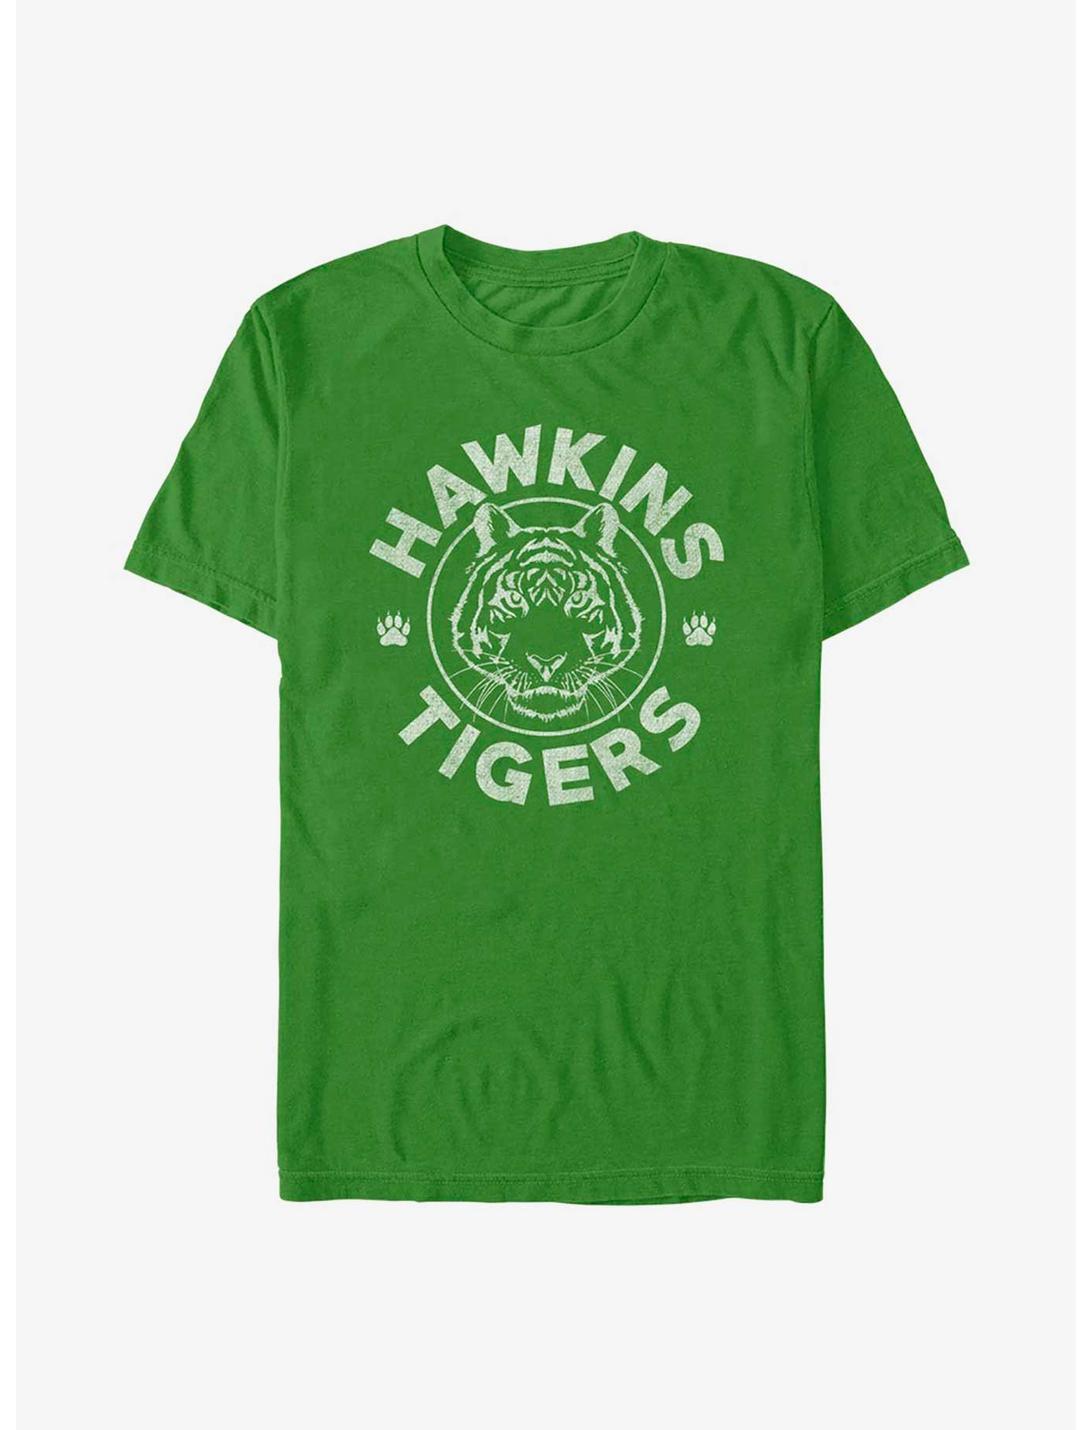 Stranger Things Hawkins Tigers T-Shirt, KELLY, hi-res